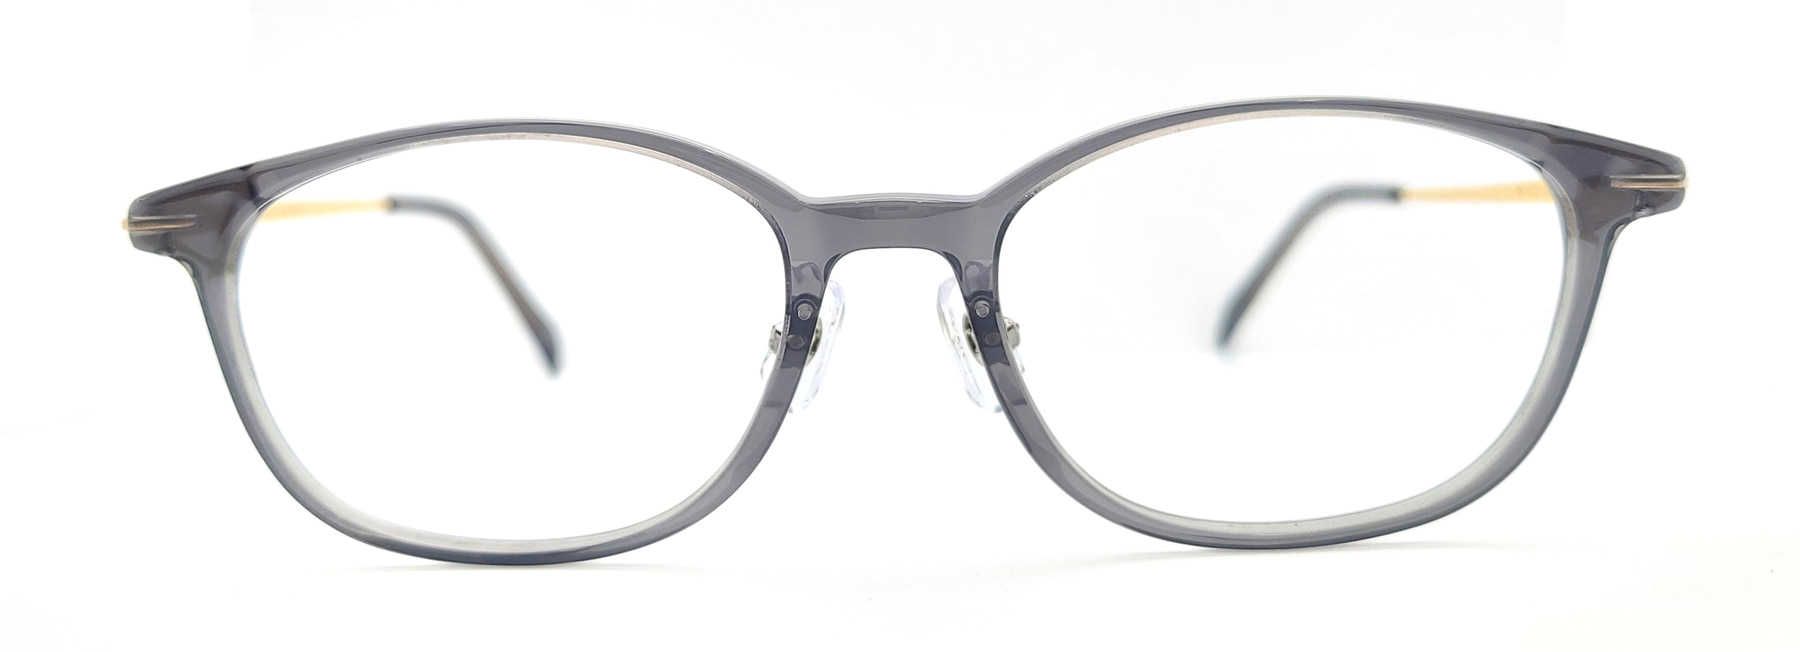 MINIHOUSE M-1422, Korean glasses, sunglasses, eyeglasses, glasses